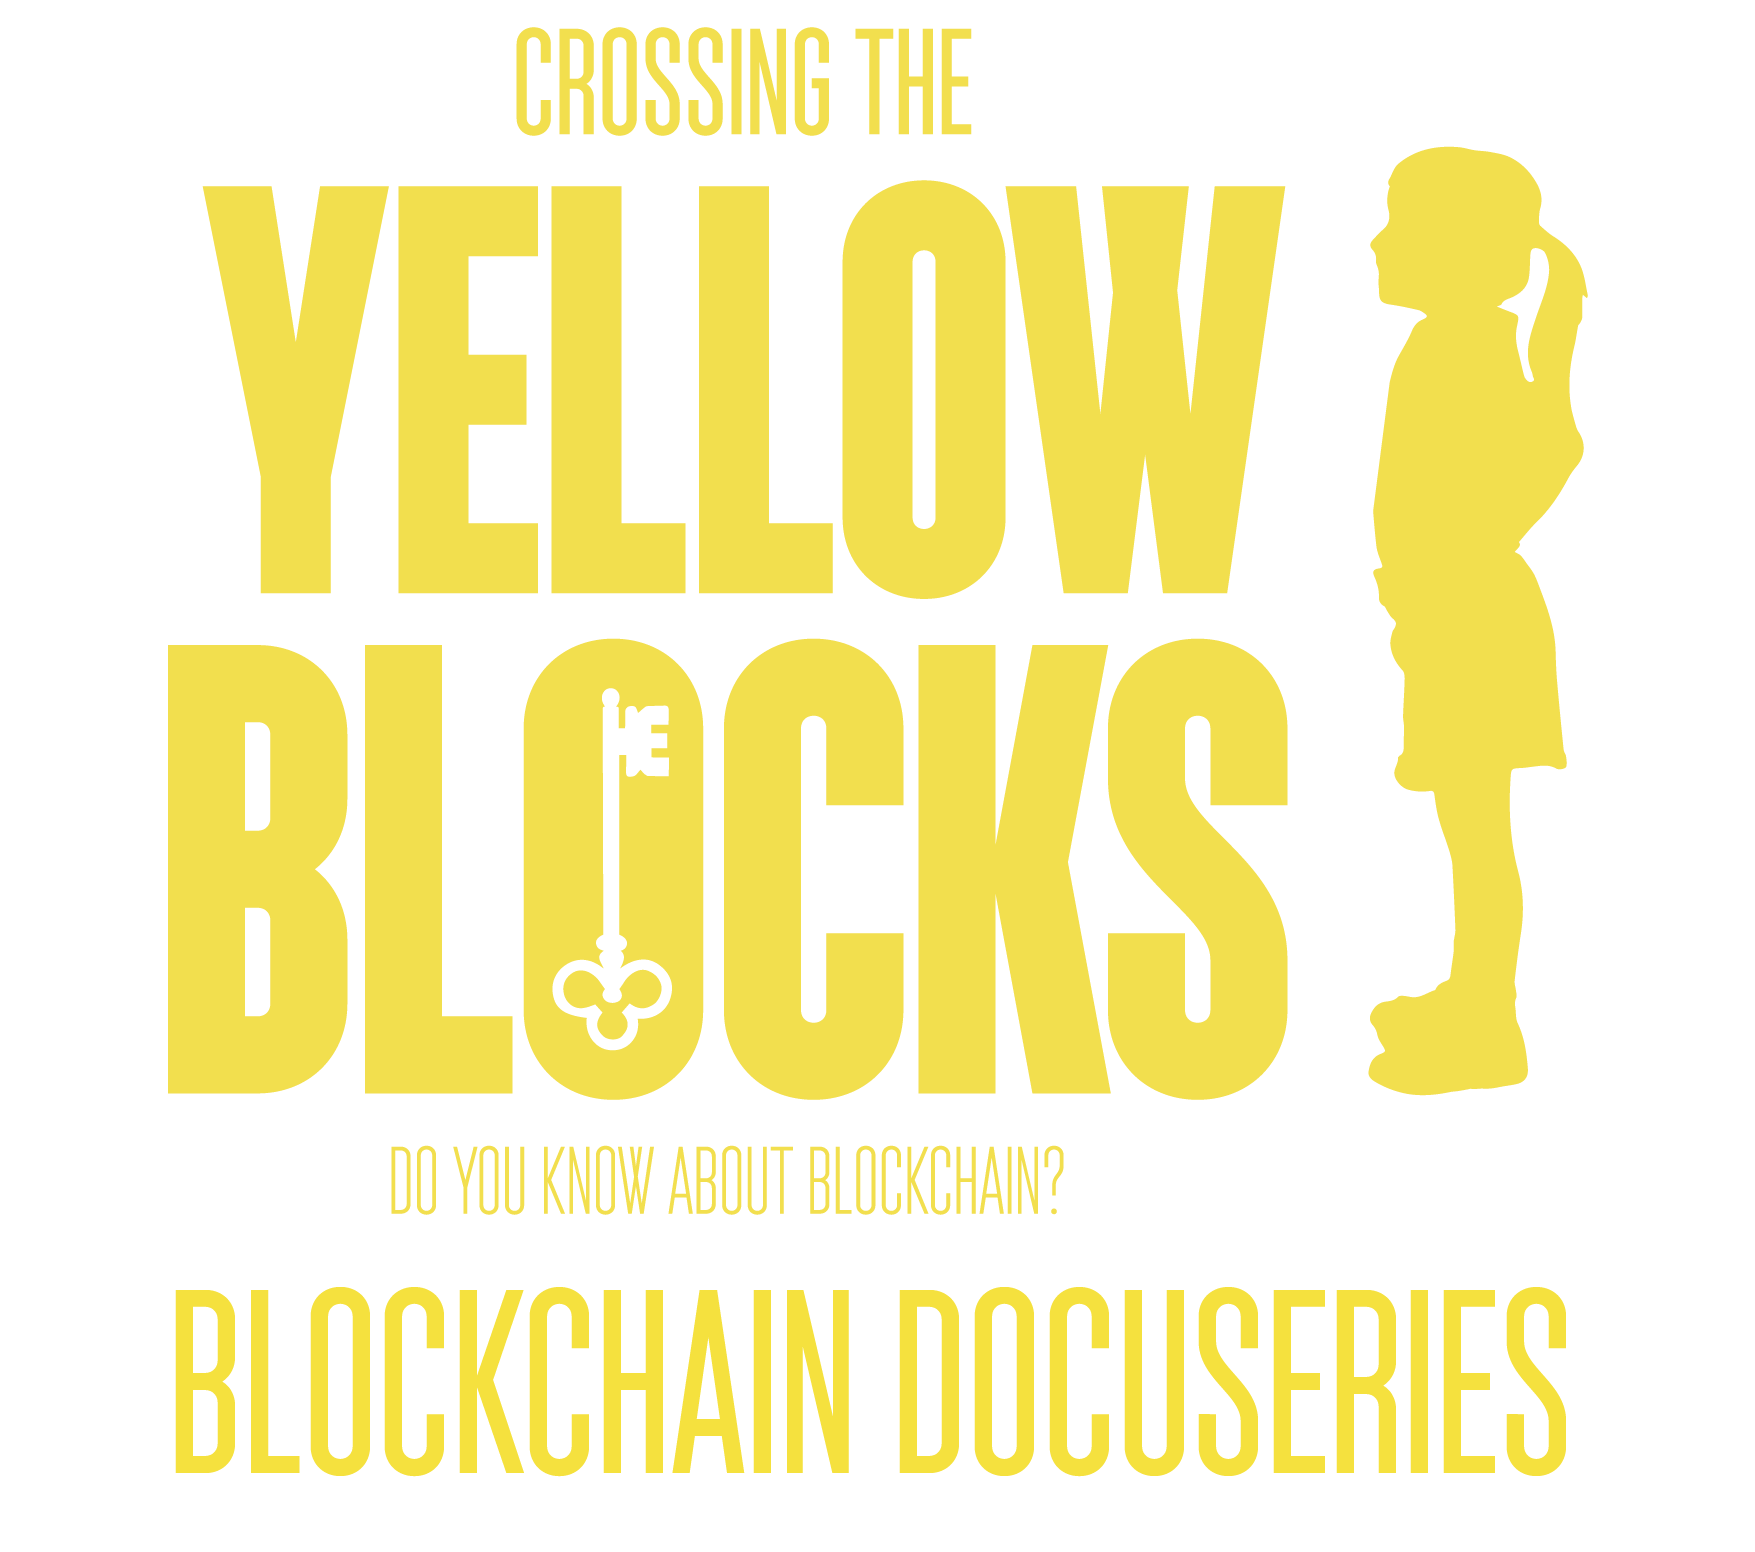 crossing the yellow blocks